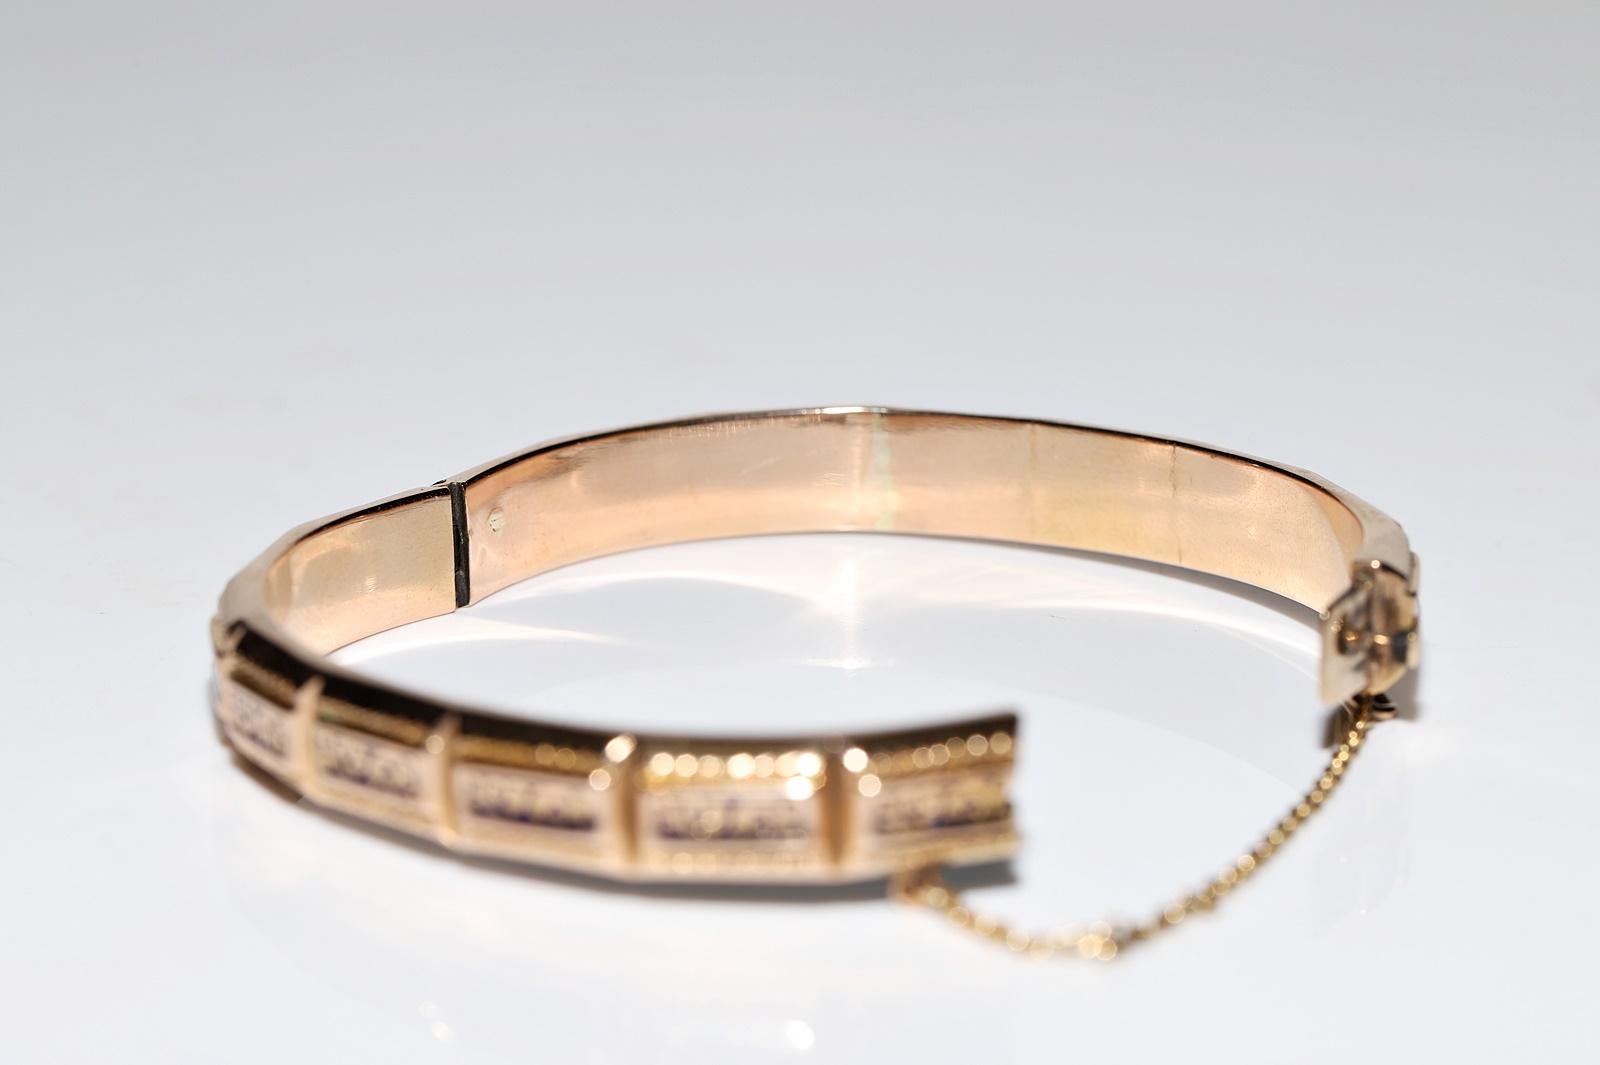 Antique Circa 1900s 18k Gold Enamel Decorated Bracelet For Sale 12